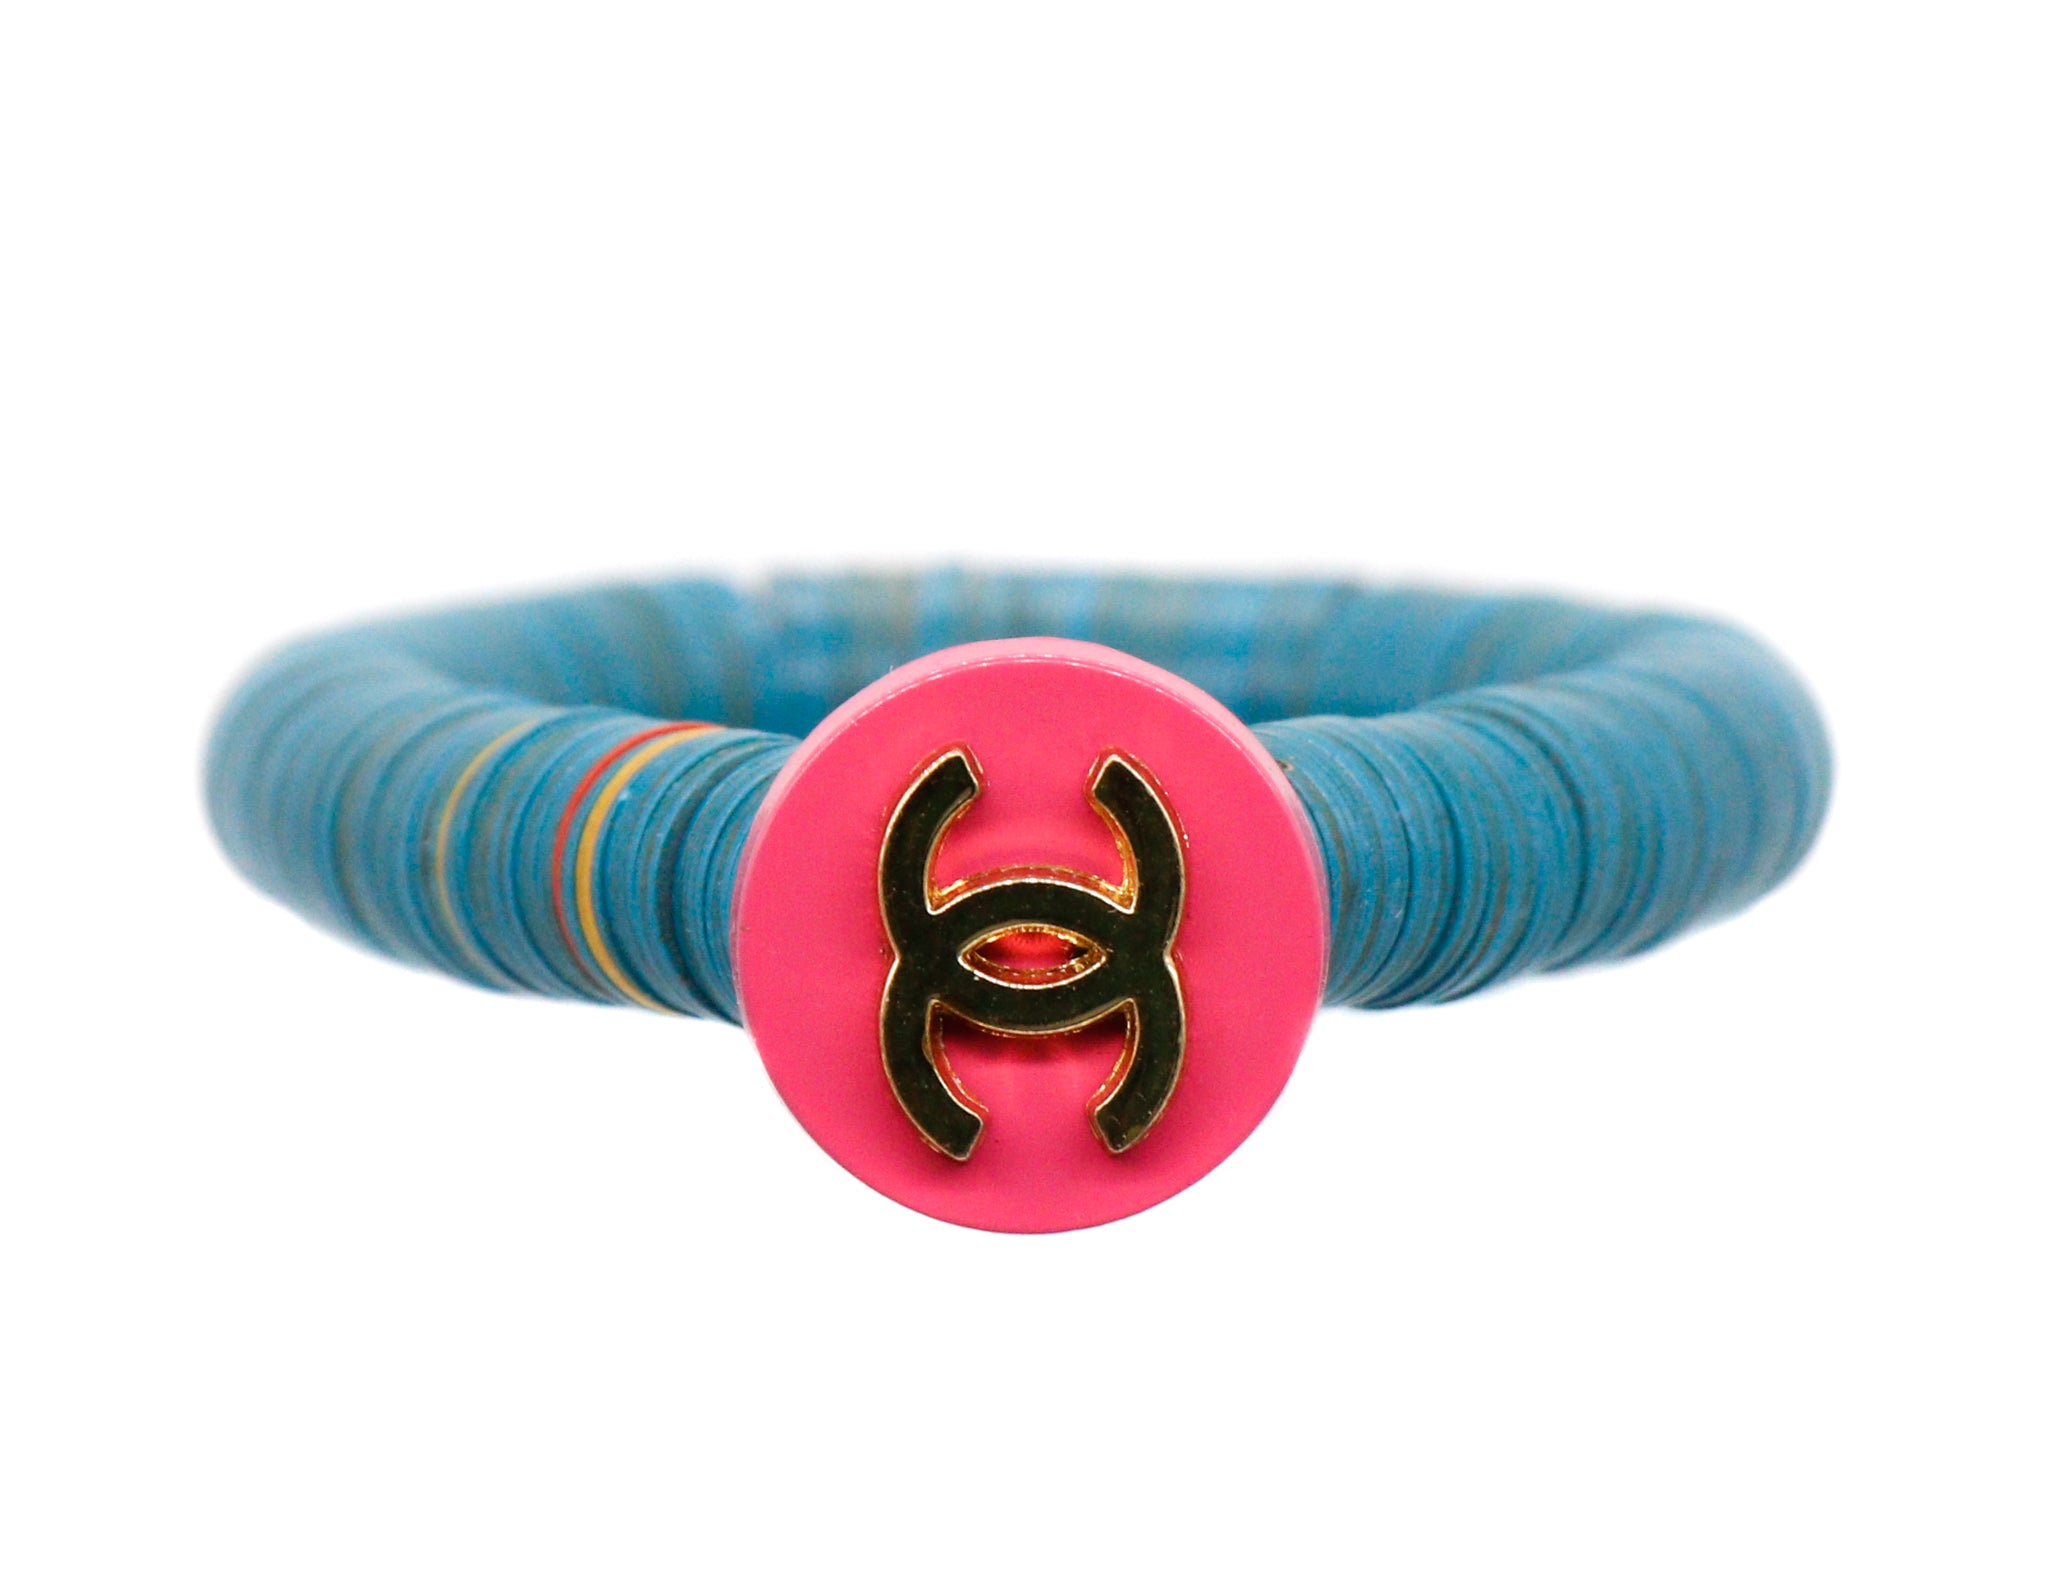 African vinyl bracelet with a repurposed pink designer button